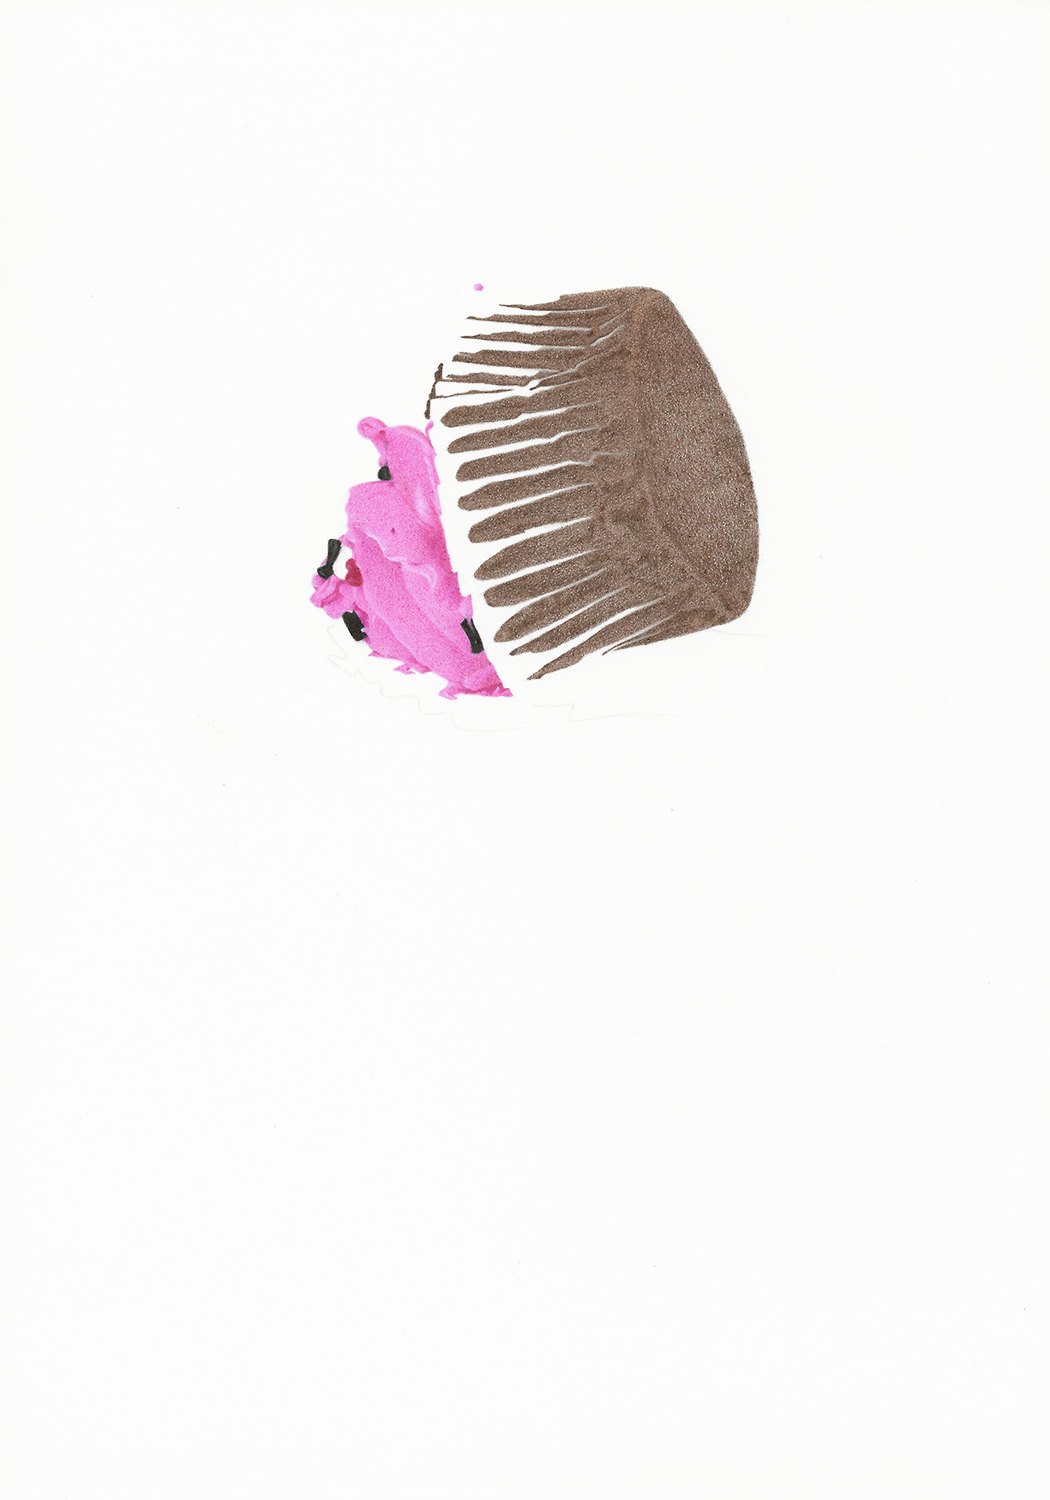 Fallen Cupcake